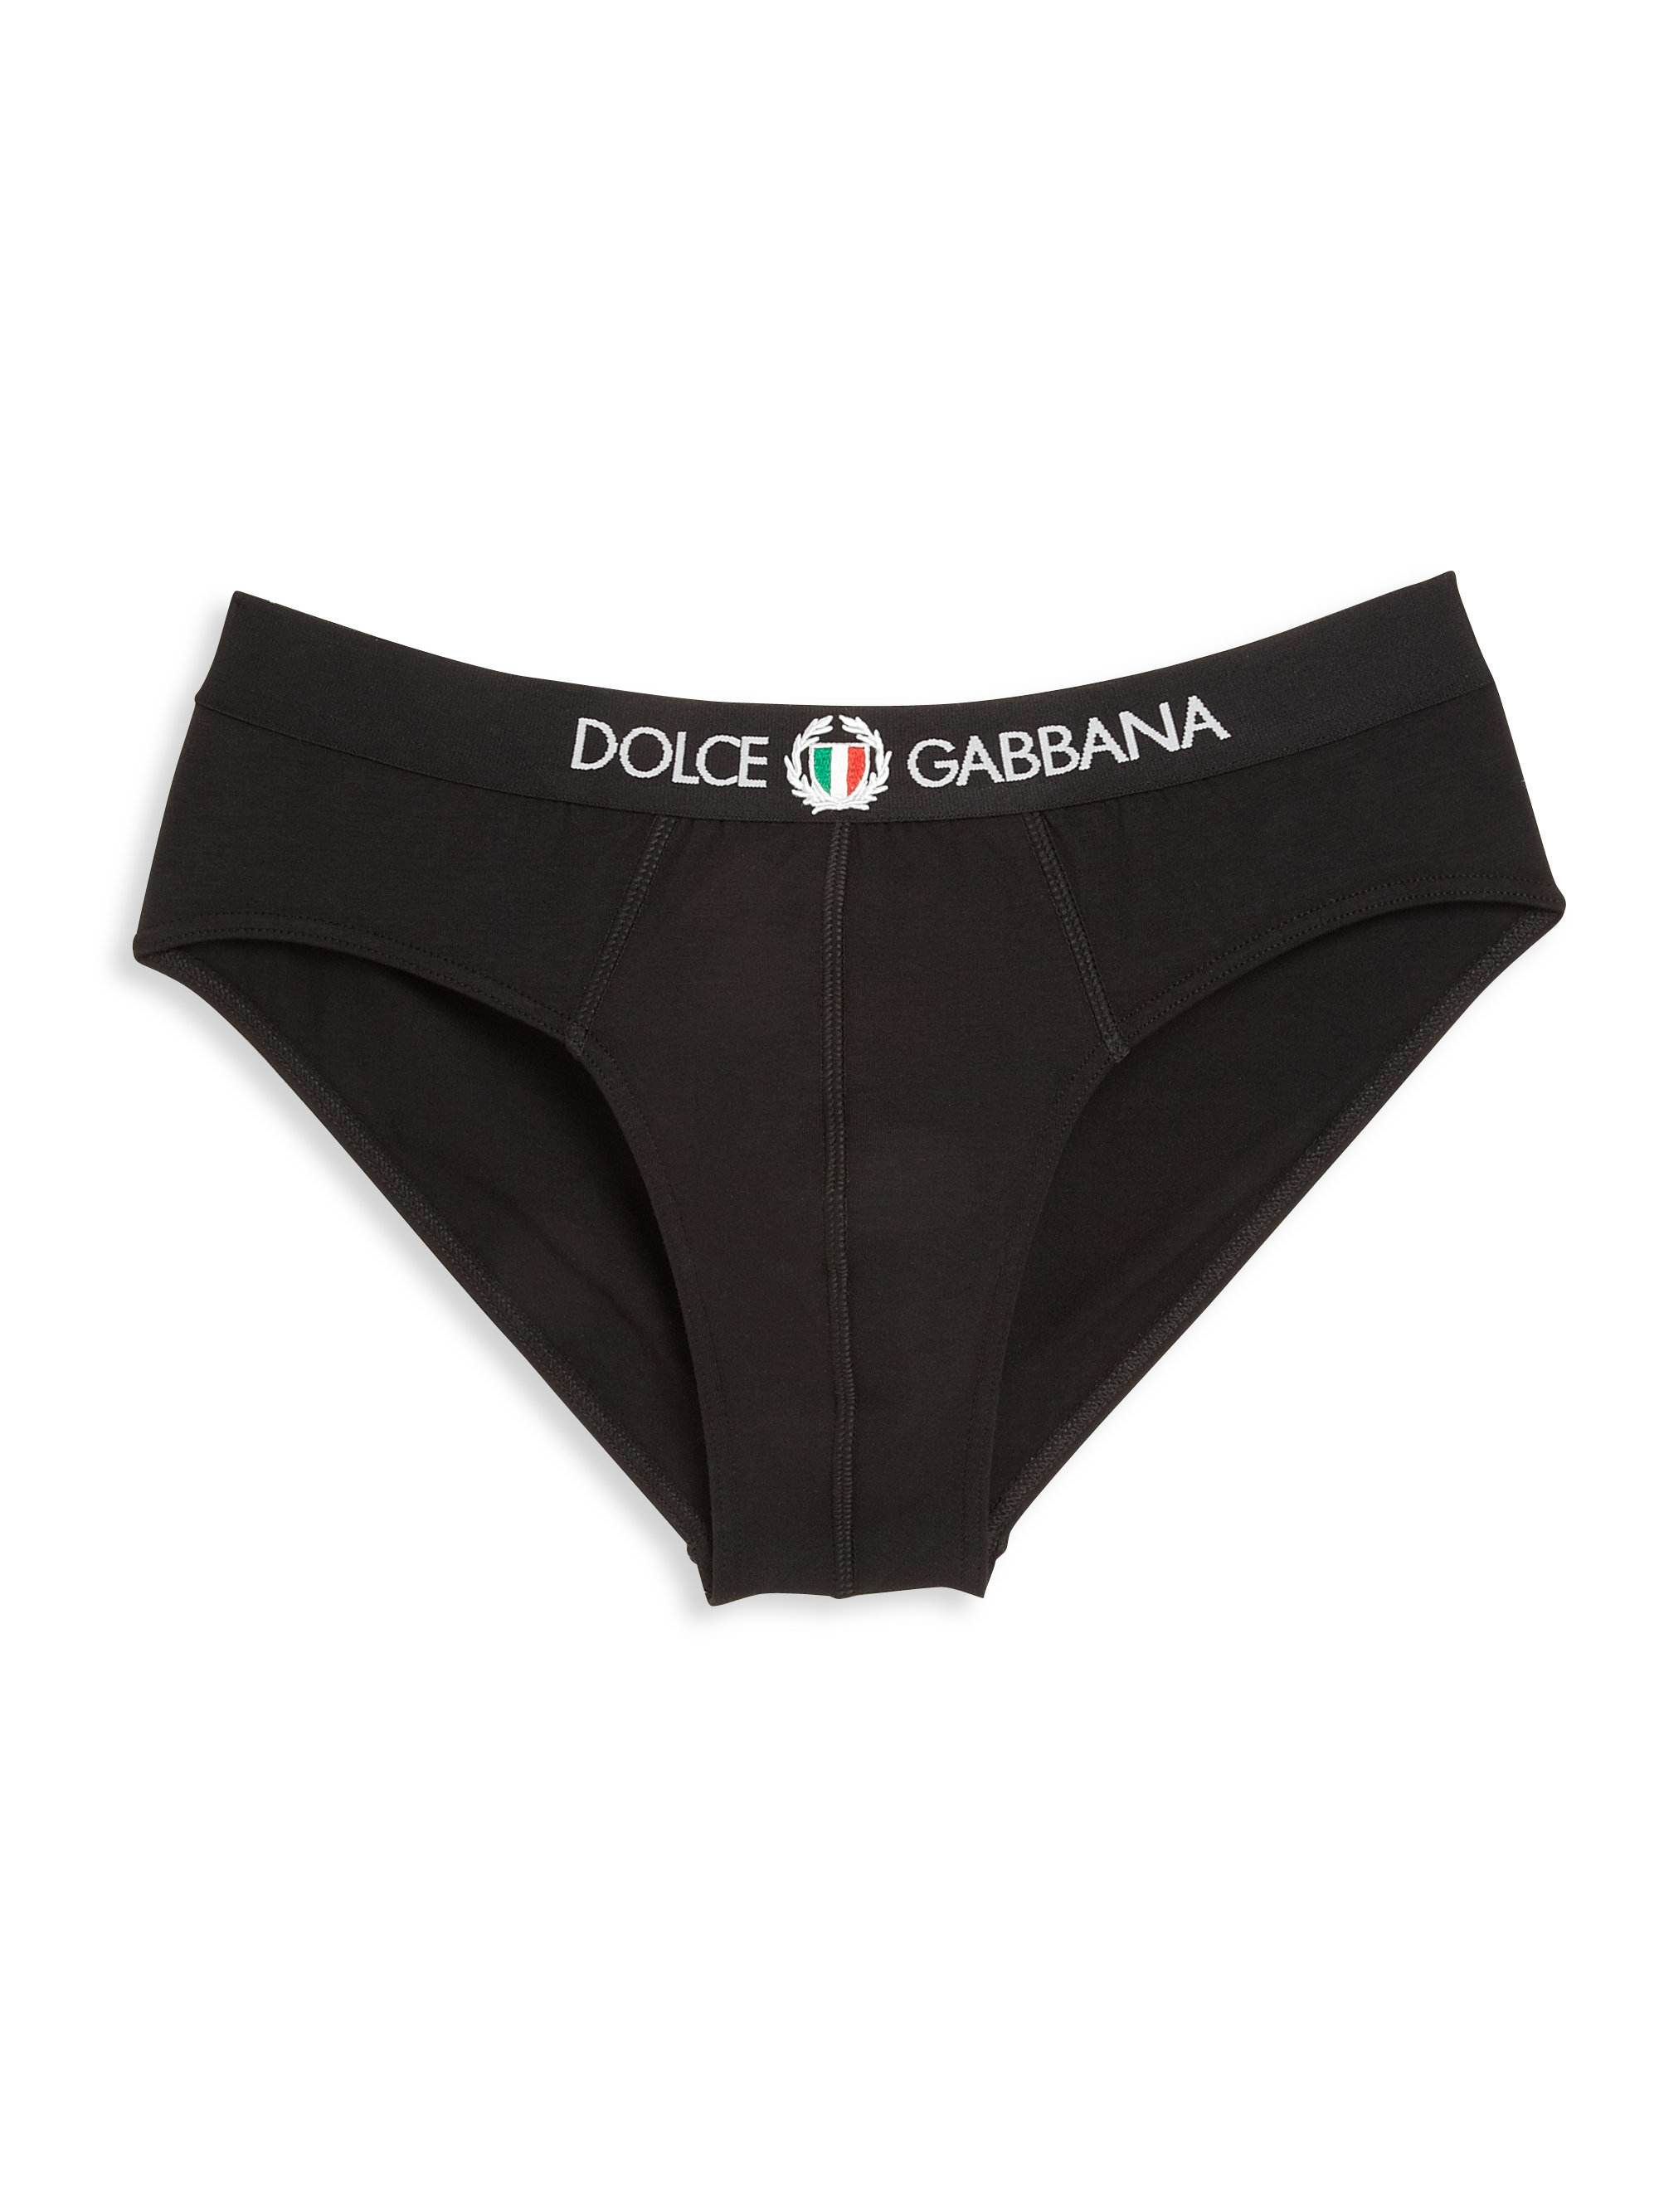 dolce and gabbana underwear size chart